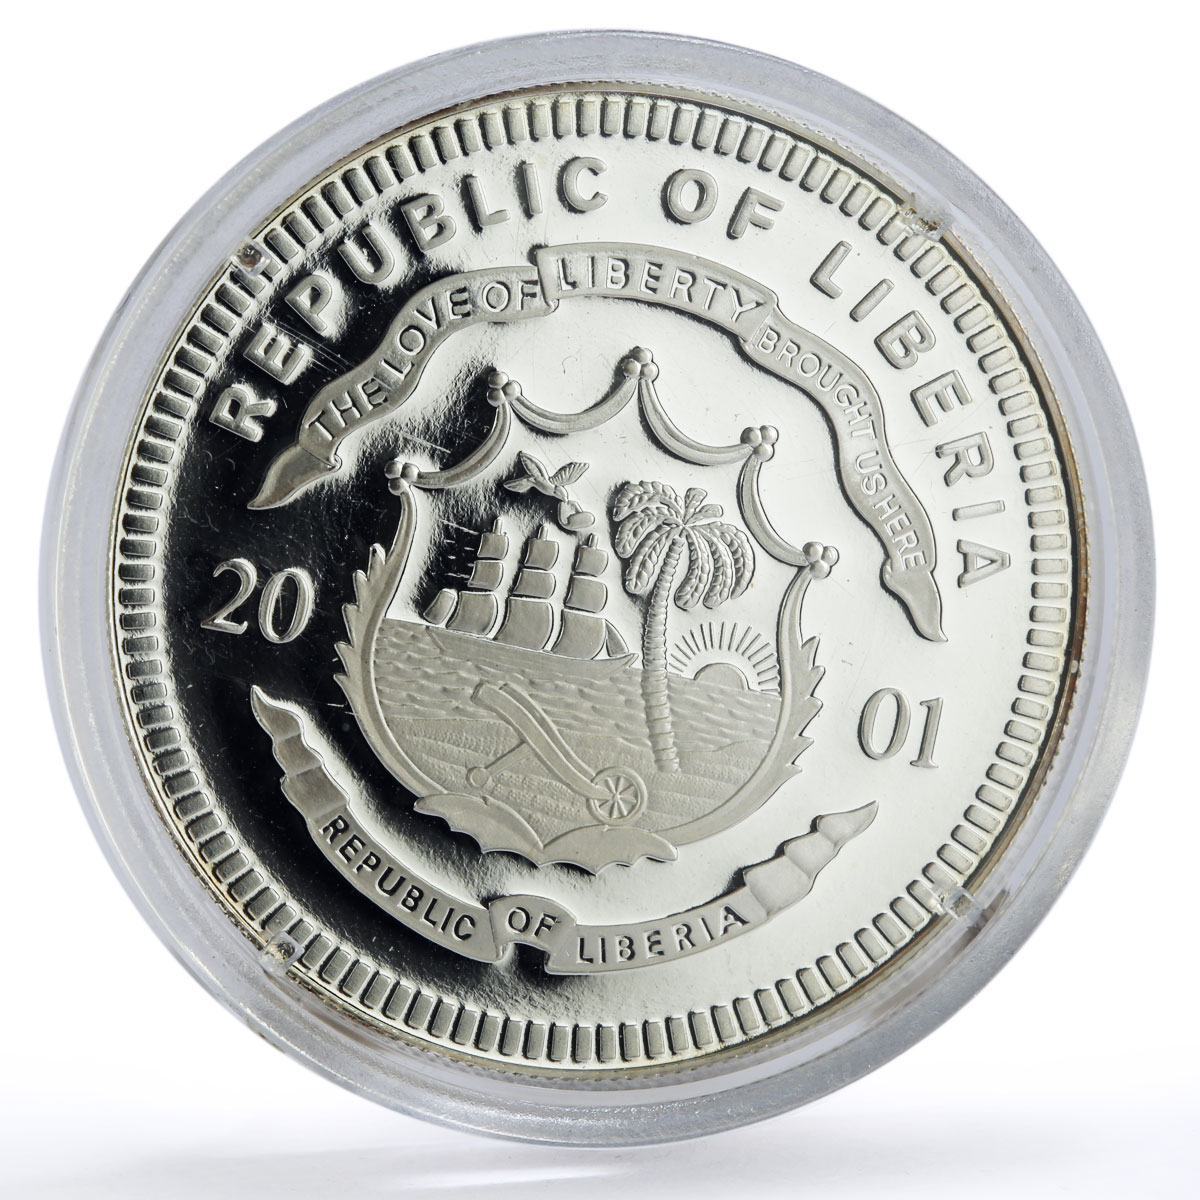 Liberia 20 dollars Trains Railway Locomotive Seraing silver coin 2001